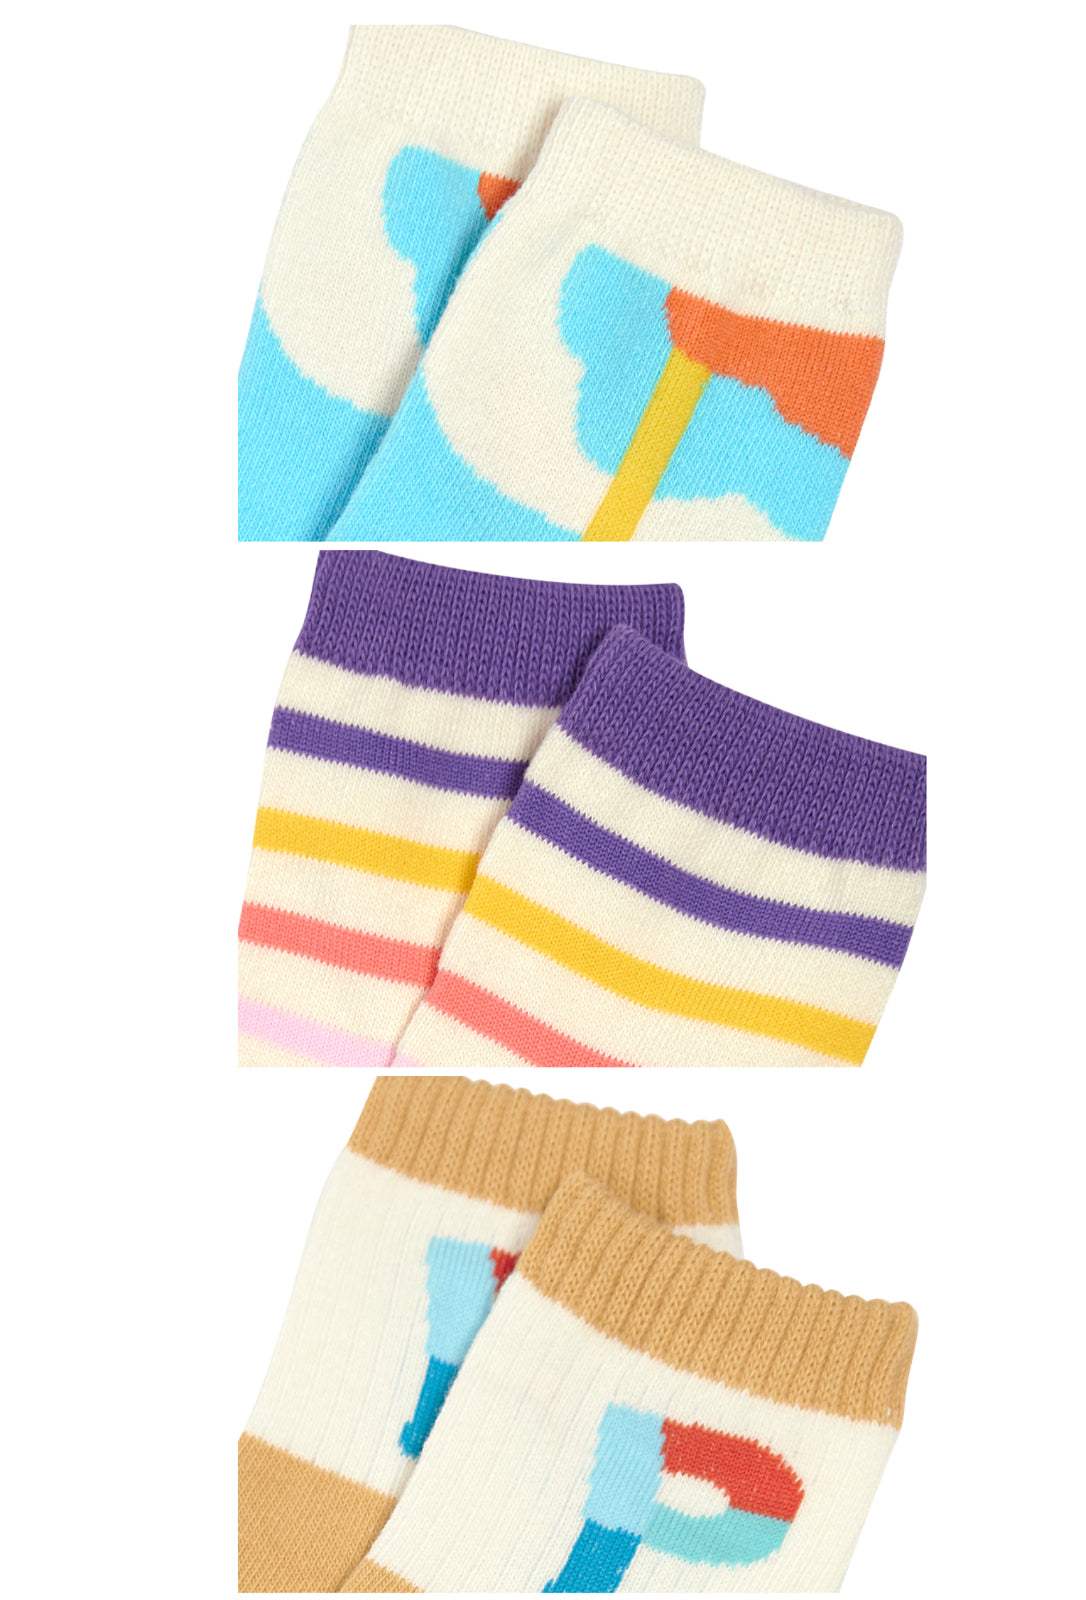 Kids Socks Set - BPB (3 pairs)